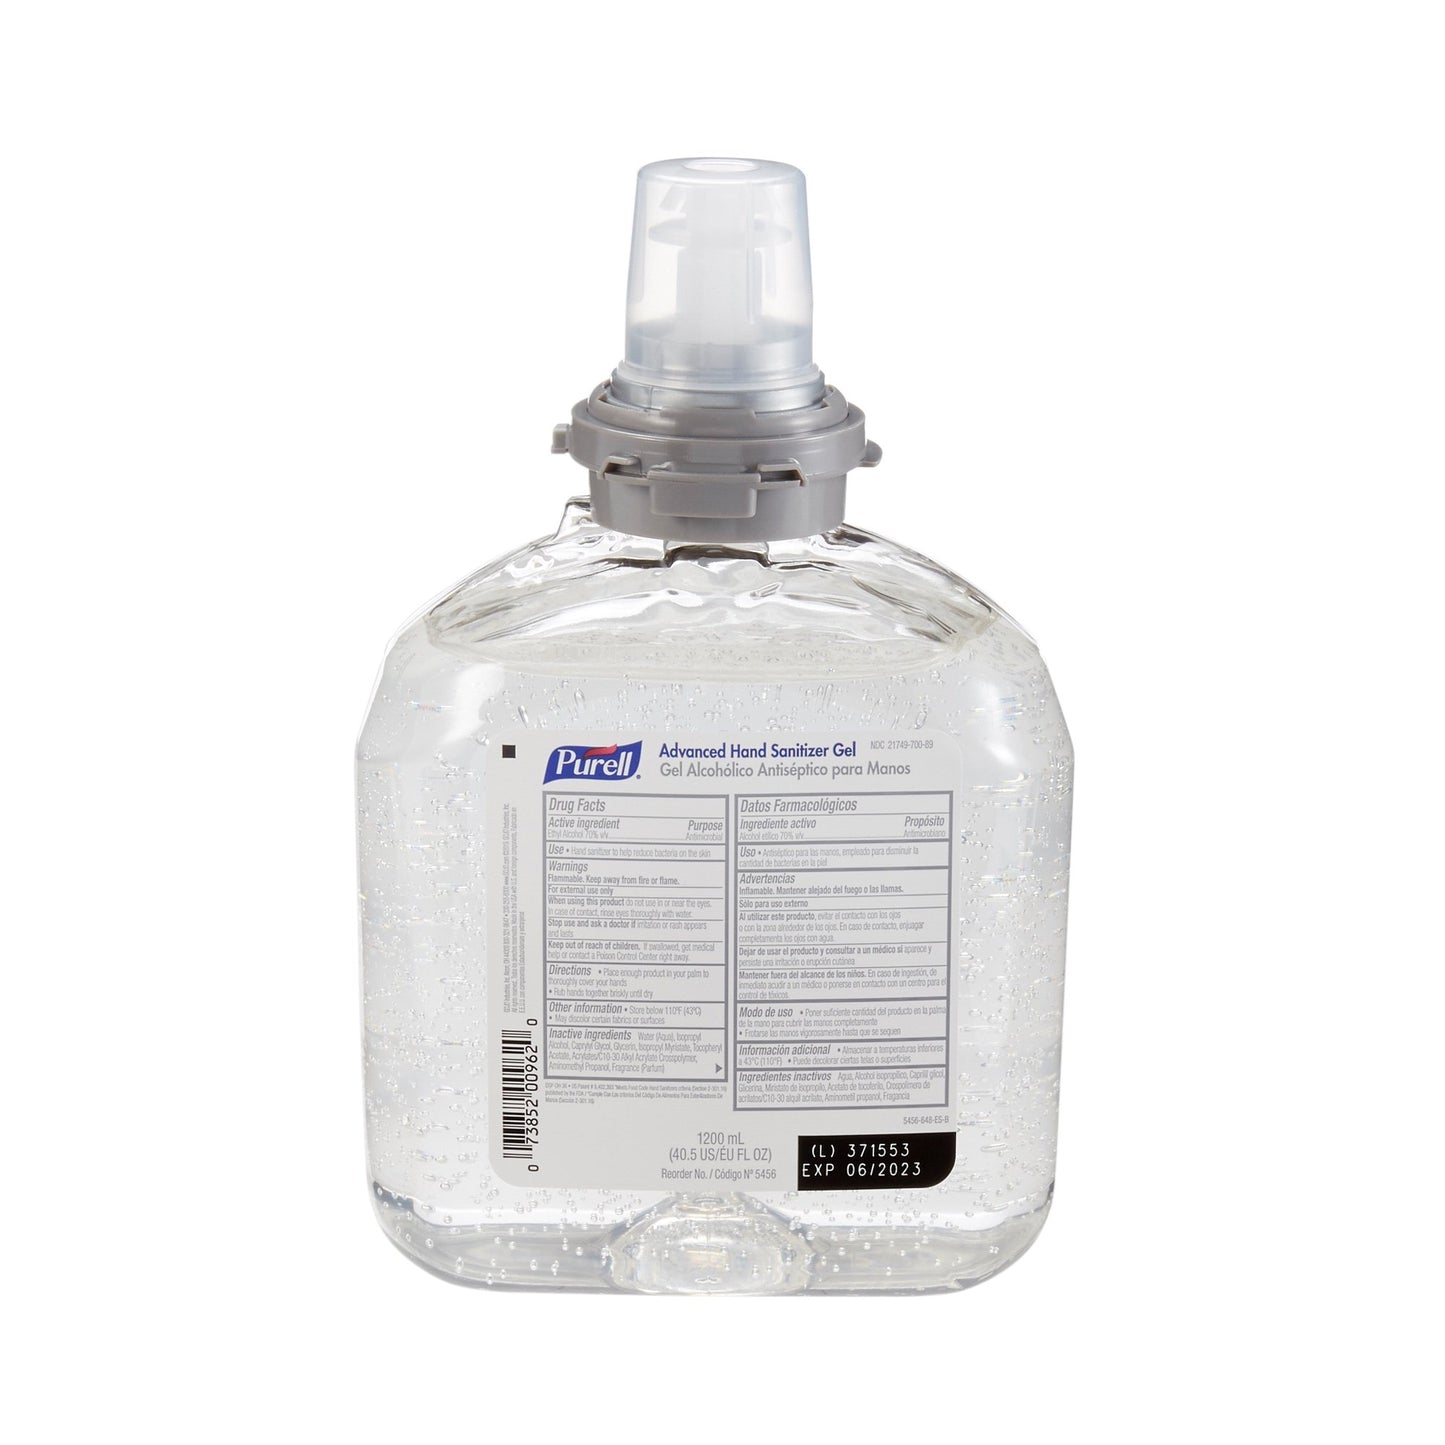 Purell Advanced Hand Sanitizer Gel 1200 mL Dispenser Refill Bottle